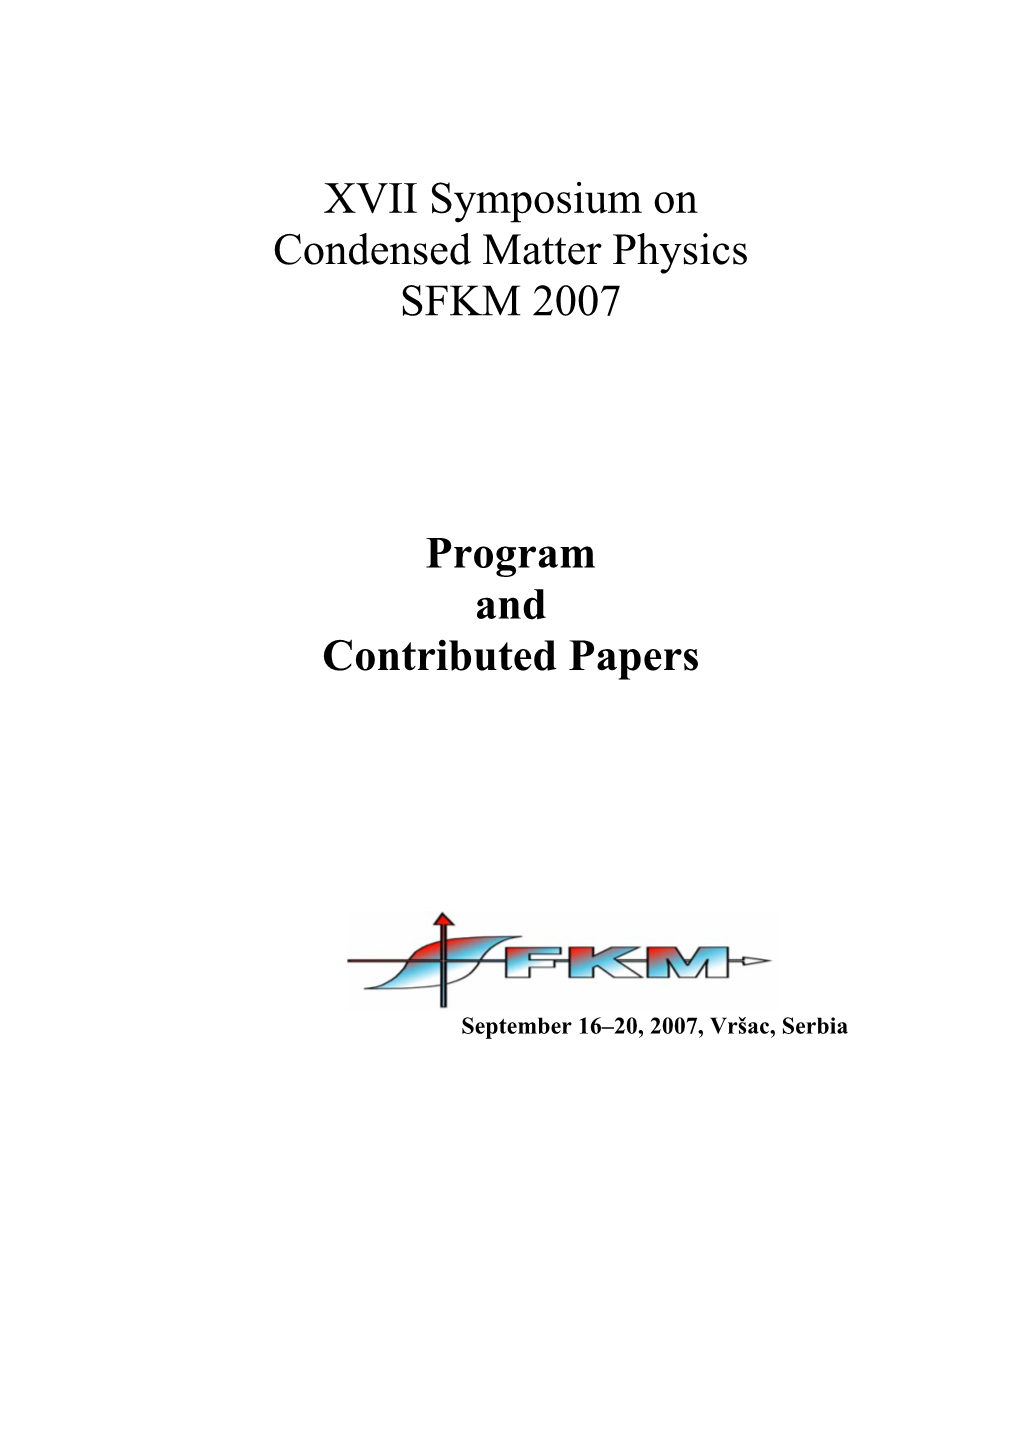 XVII Symposium on Condensed Matter Physics SFKM 2007